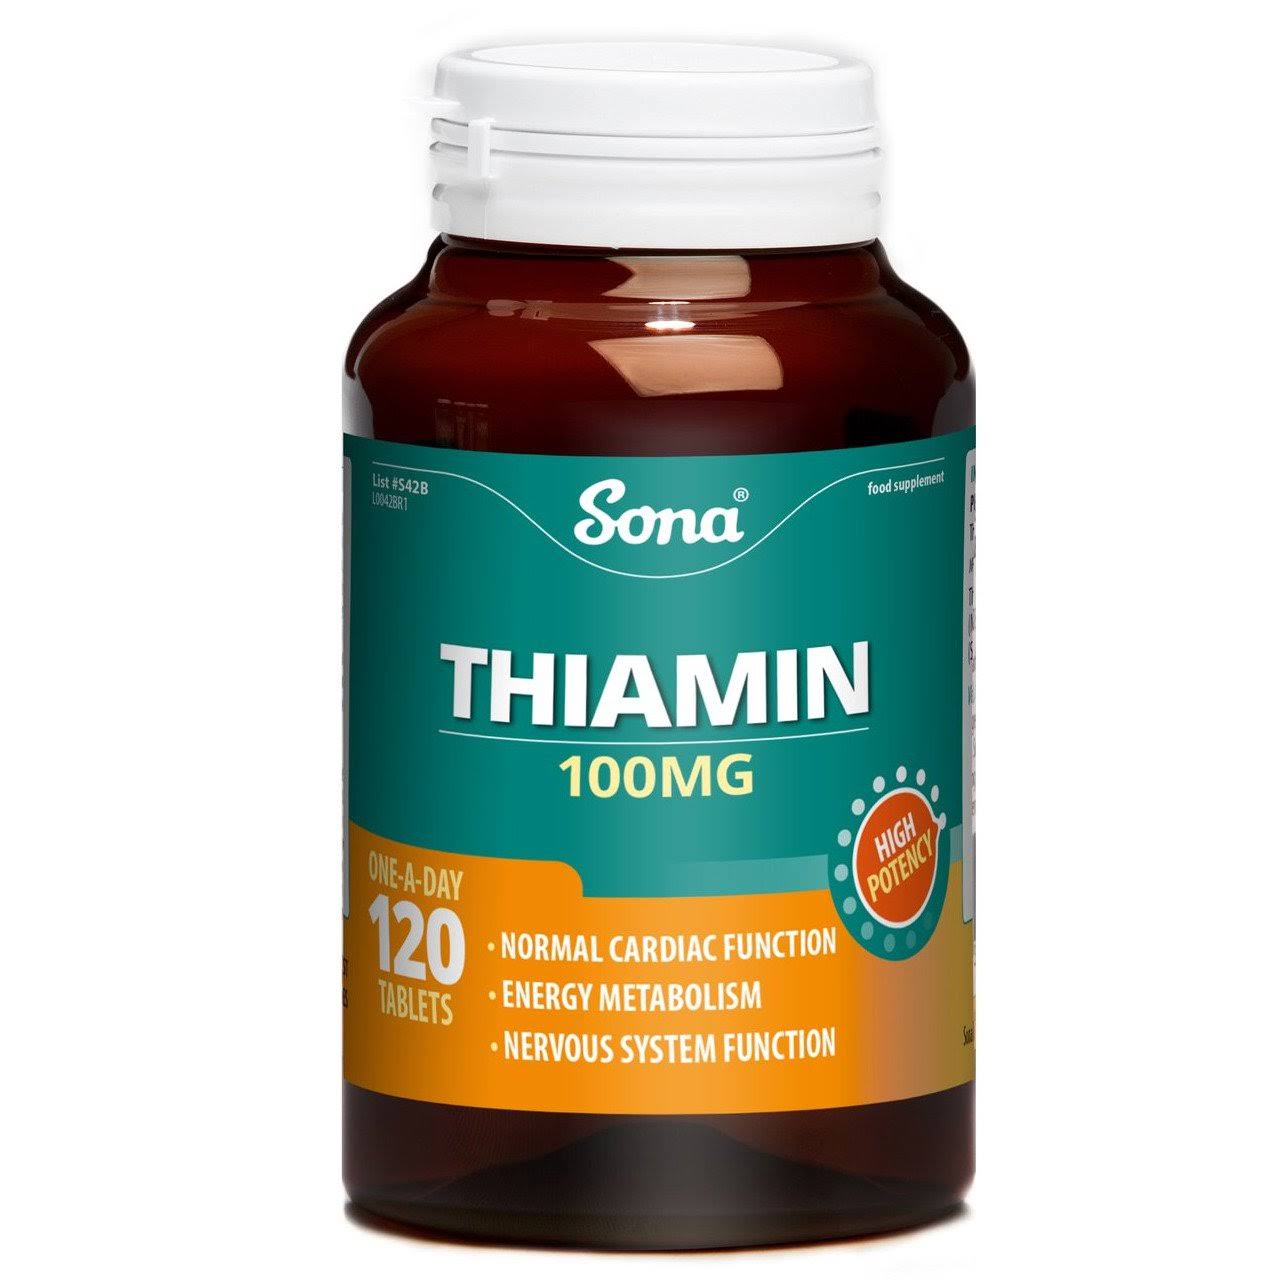 Sona Thiamin 100mg Tablets (120)